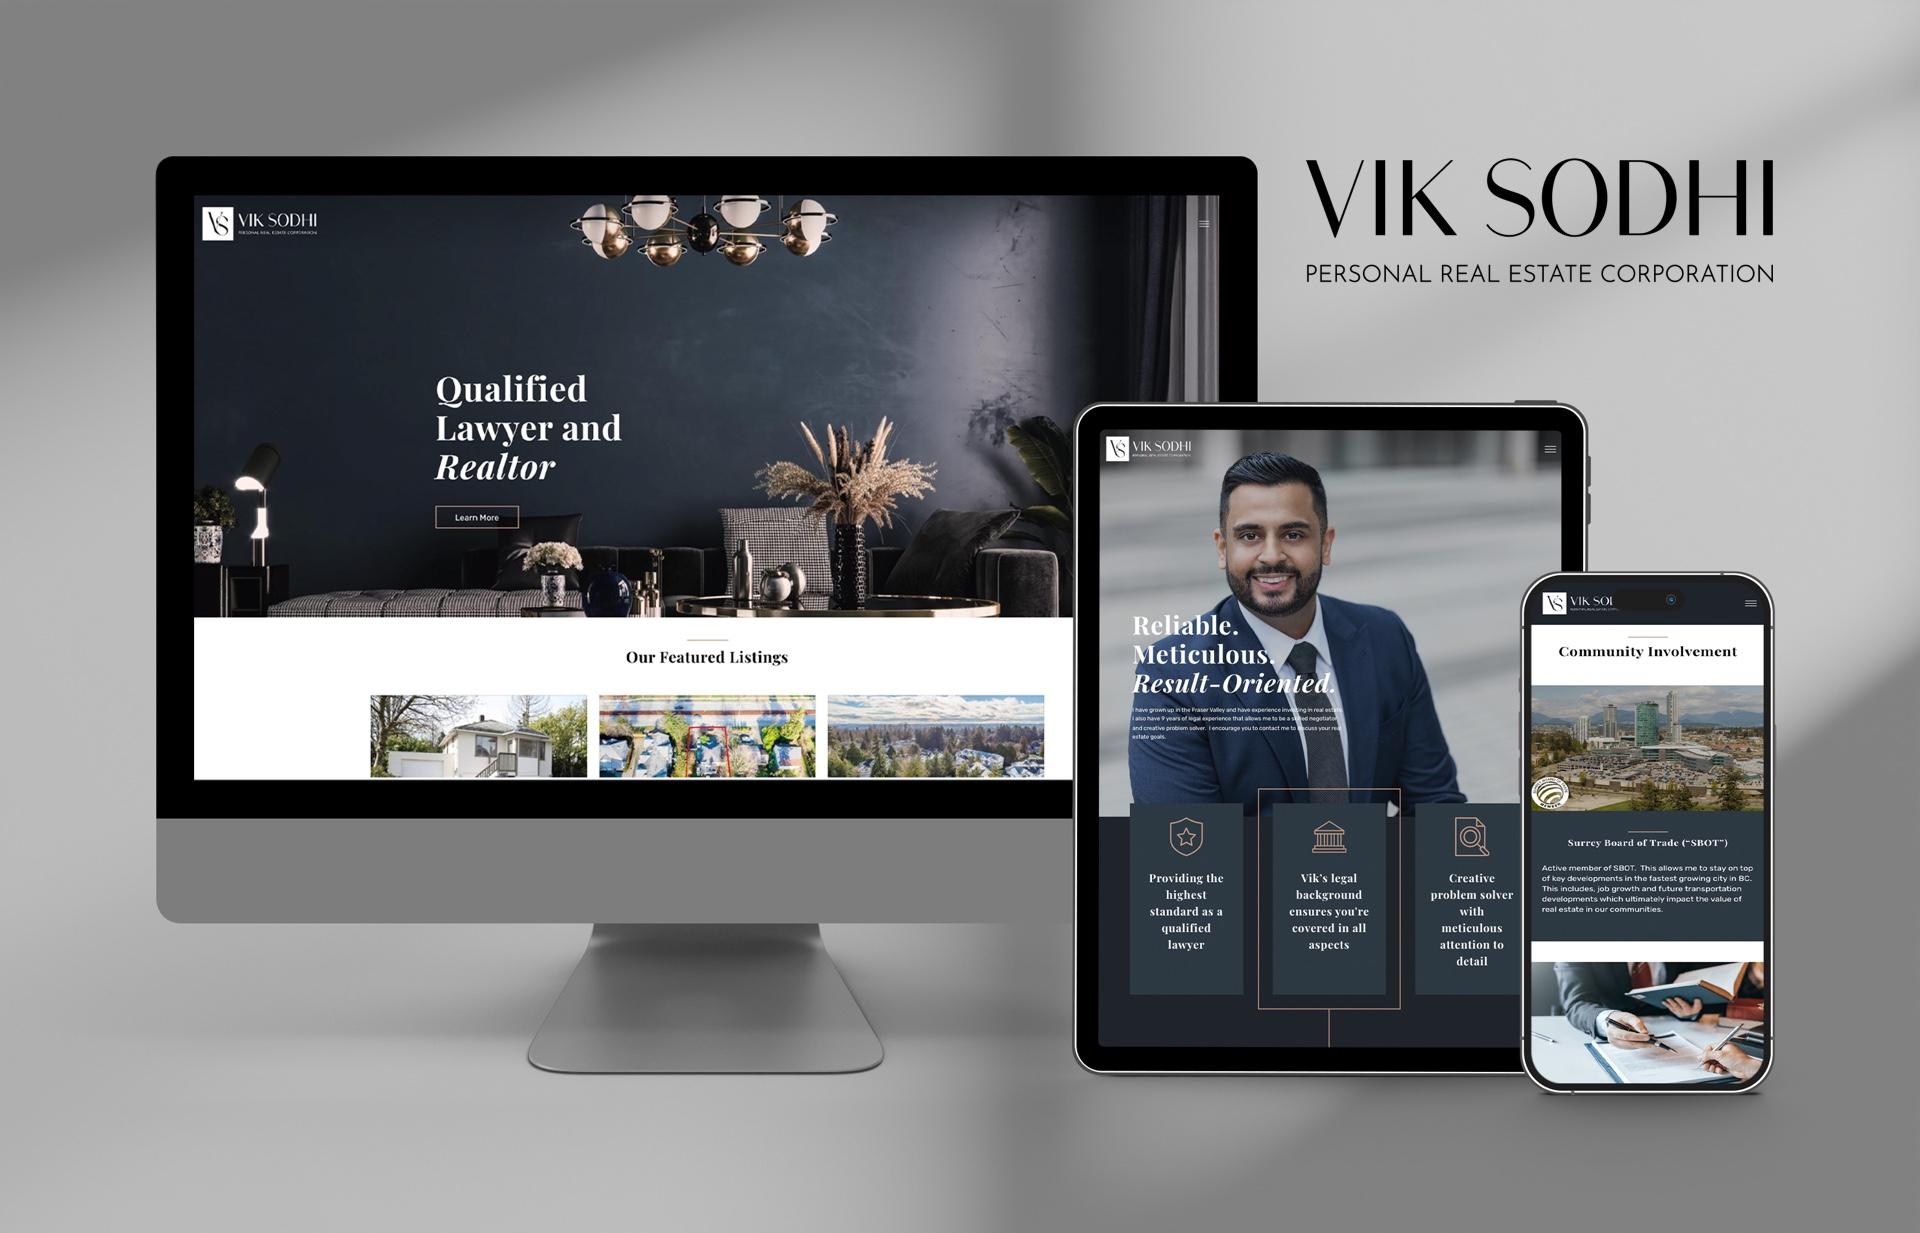 Mockups of Vik Sodhi's website and responsive design on multiple device screens.